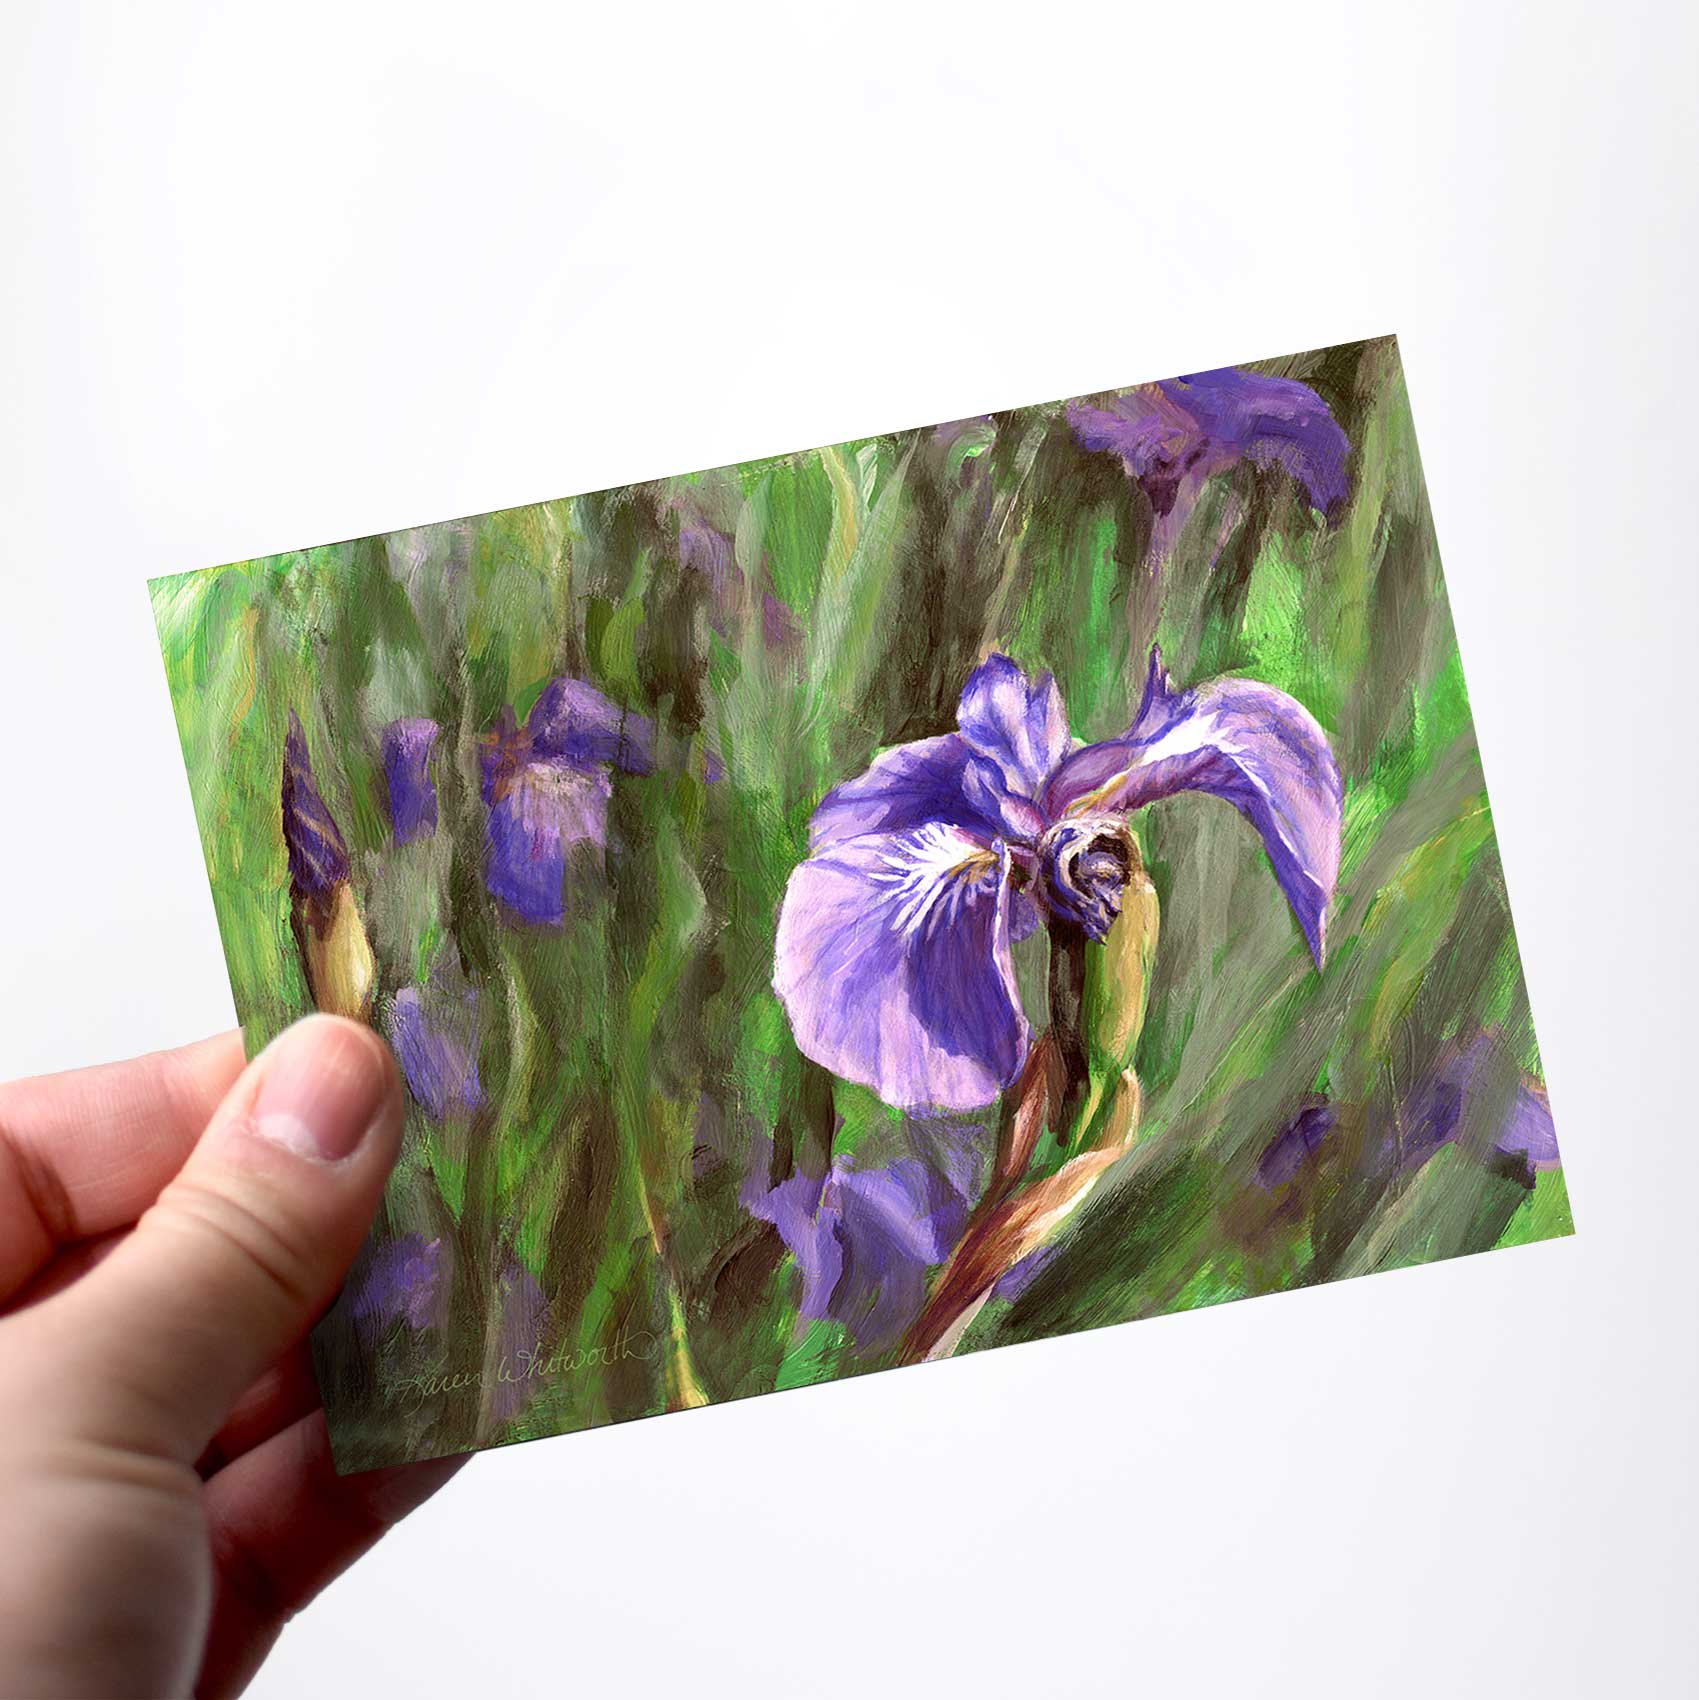 Iris Wildflower greeting card by Alaska artist Karen Whitworth